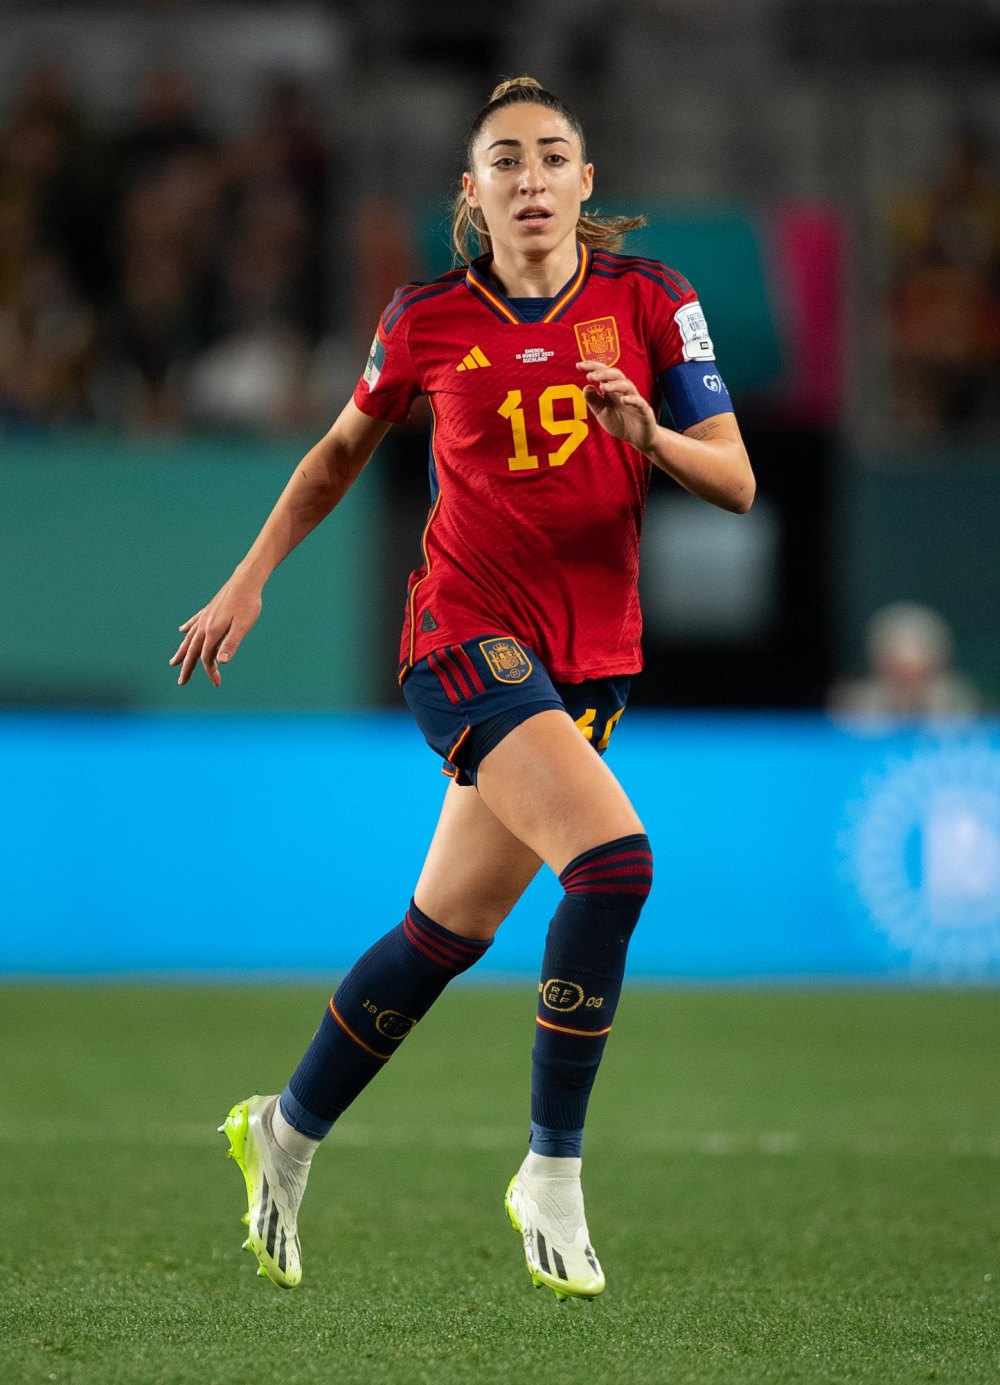 Olga Carmona - Soccer News, Rumors, & Updates